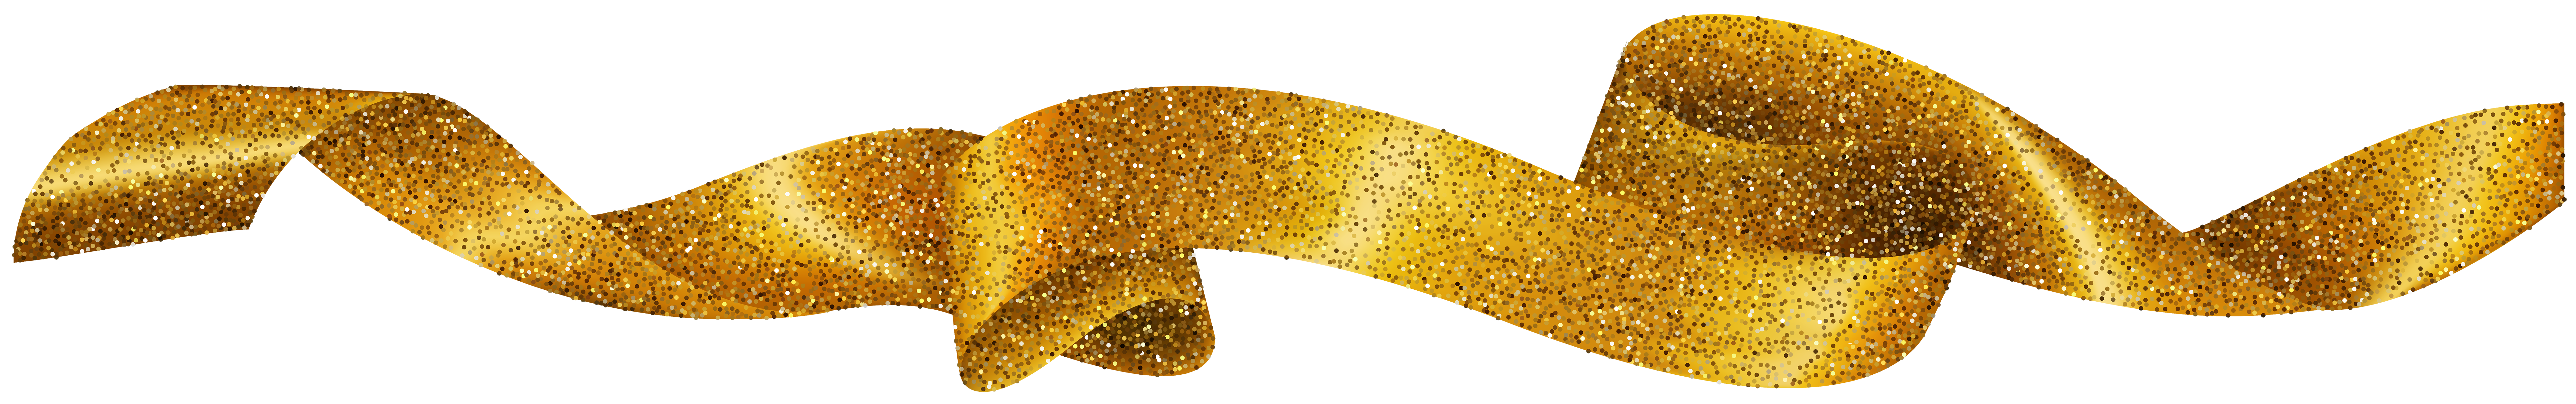 Gold Glitterline Png Logo Image for Free - Free Logo Image